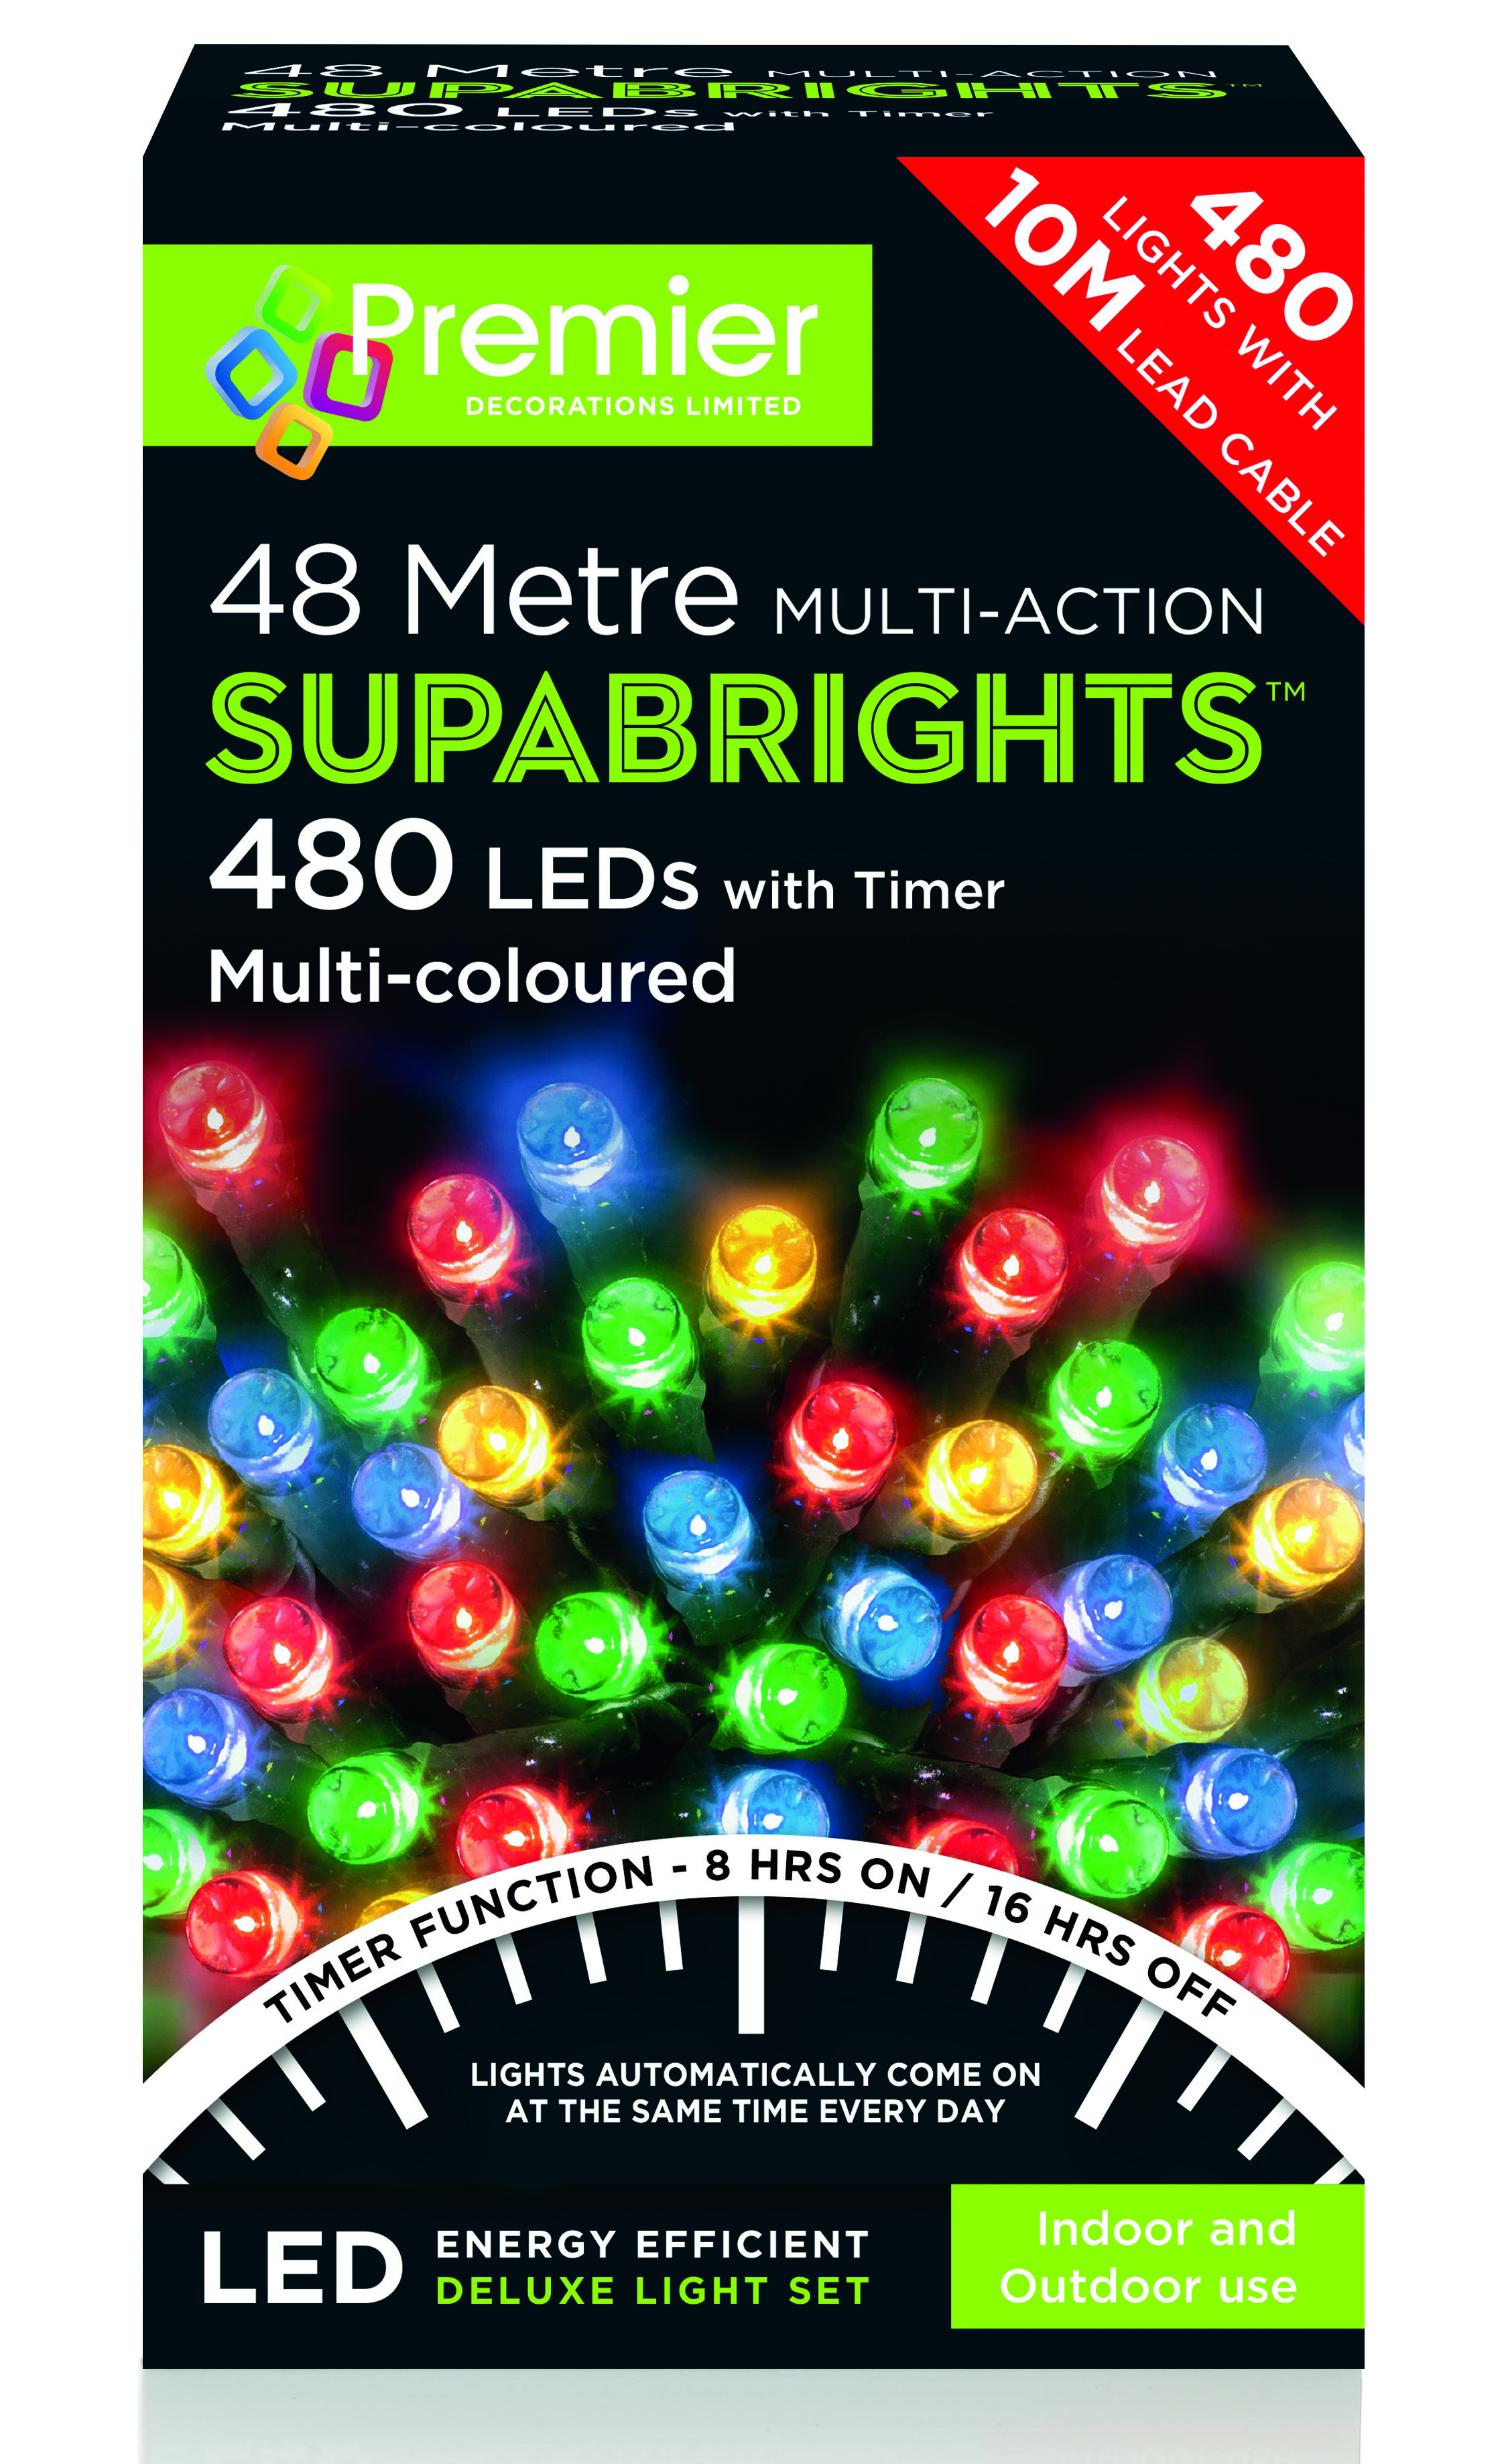 Premier Supabright Multi Action 48m LED Christmas Lights (Multi-Colour)